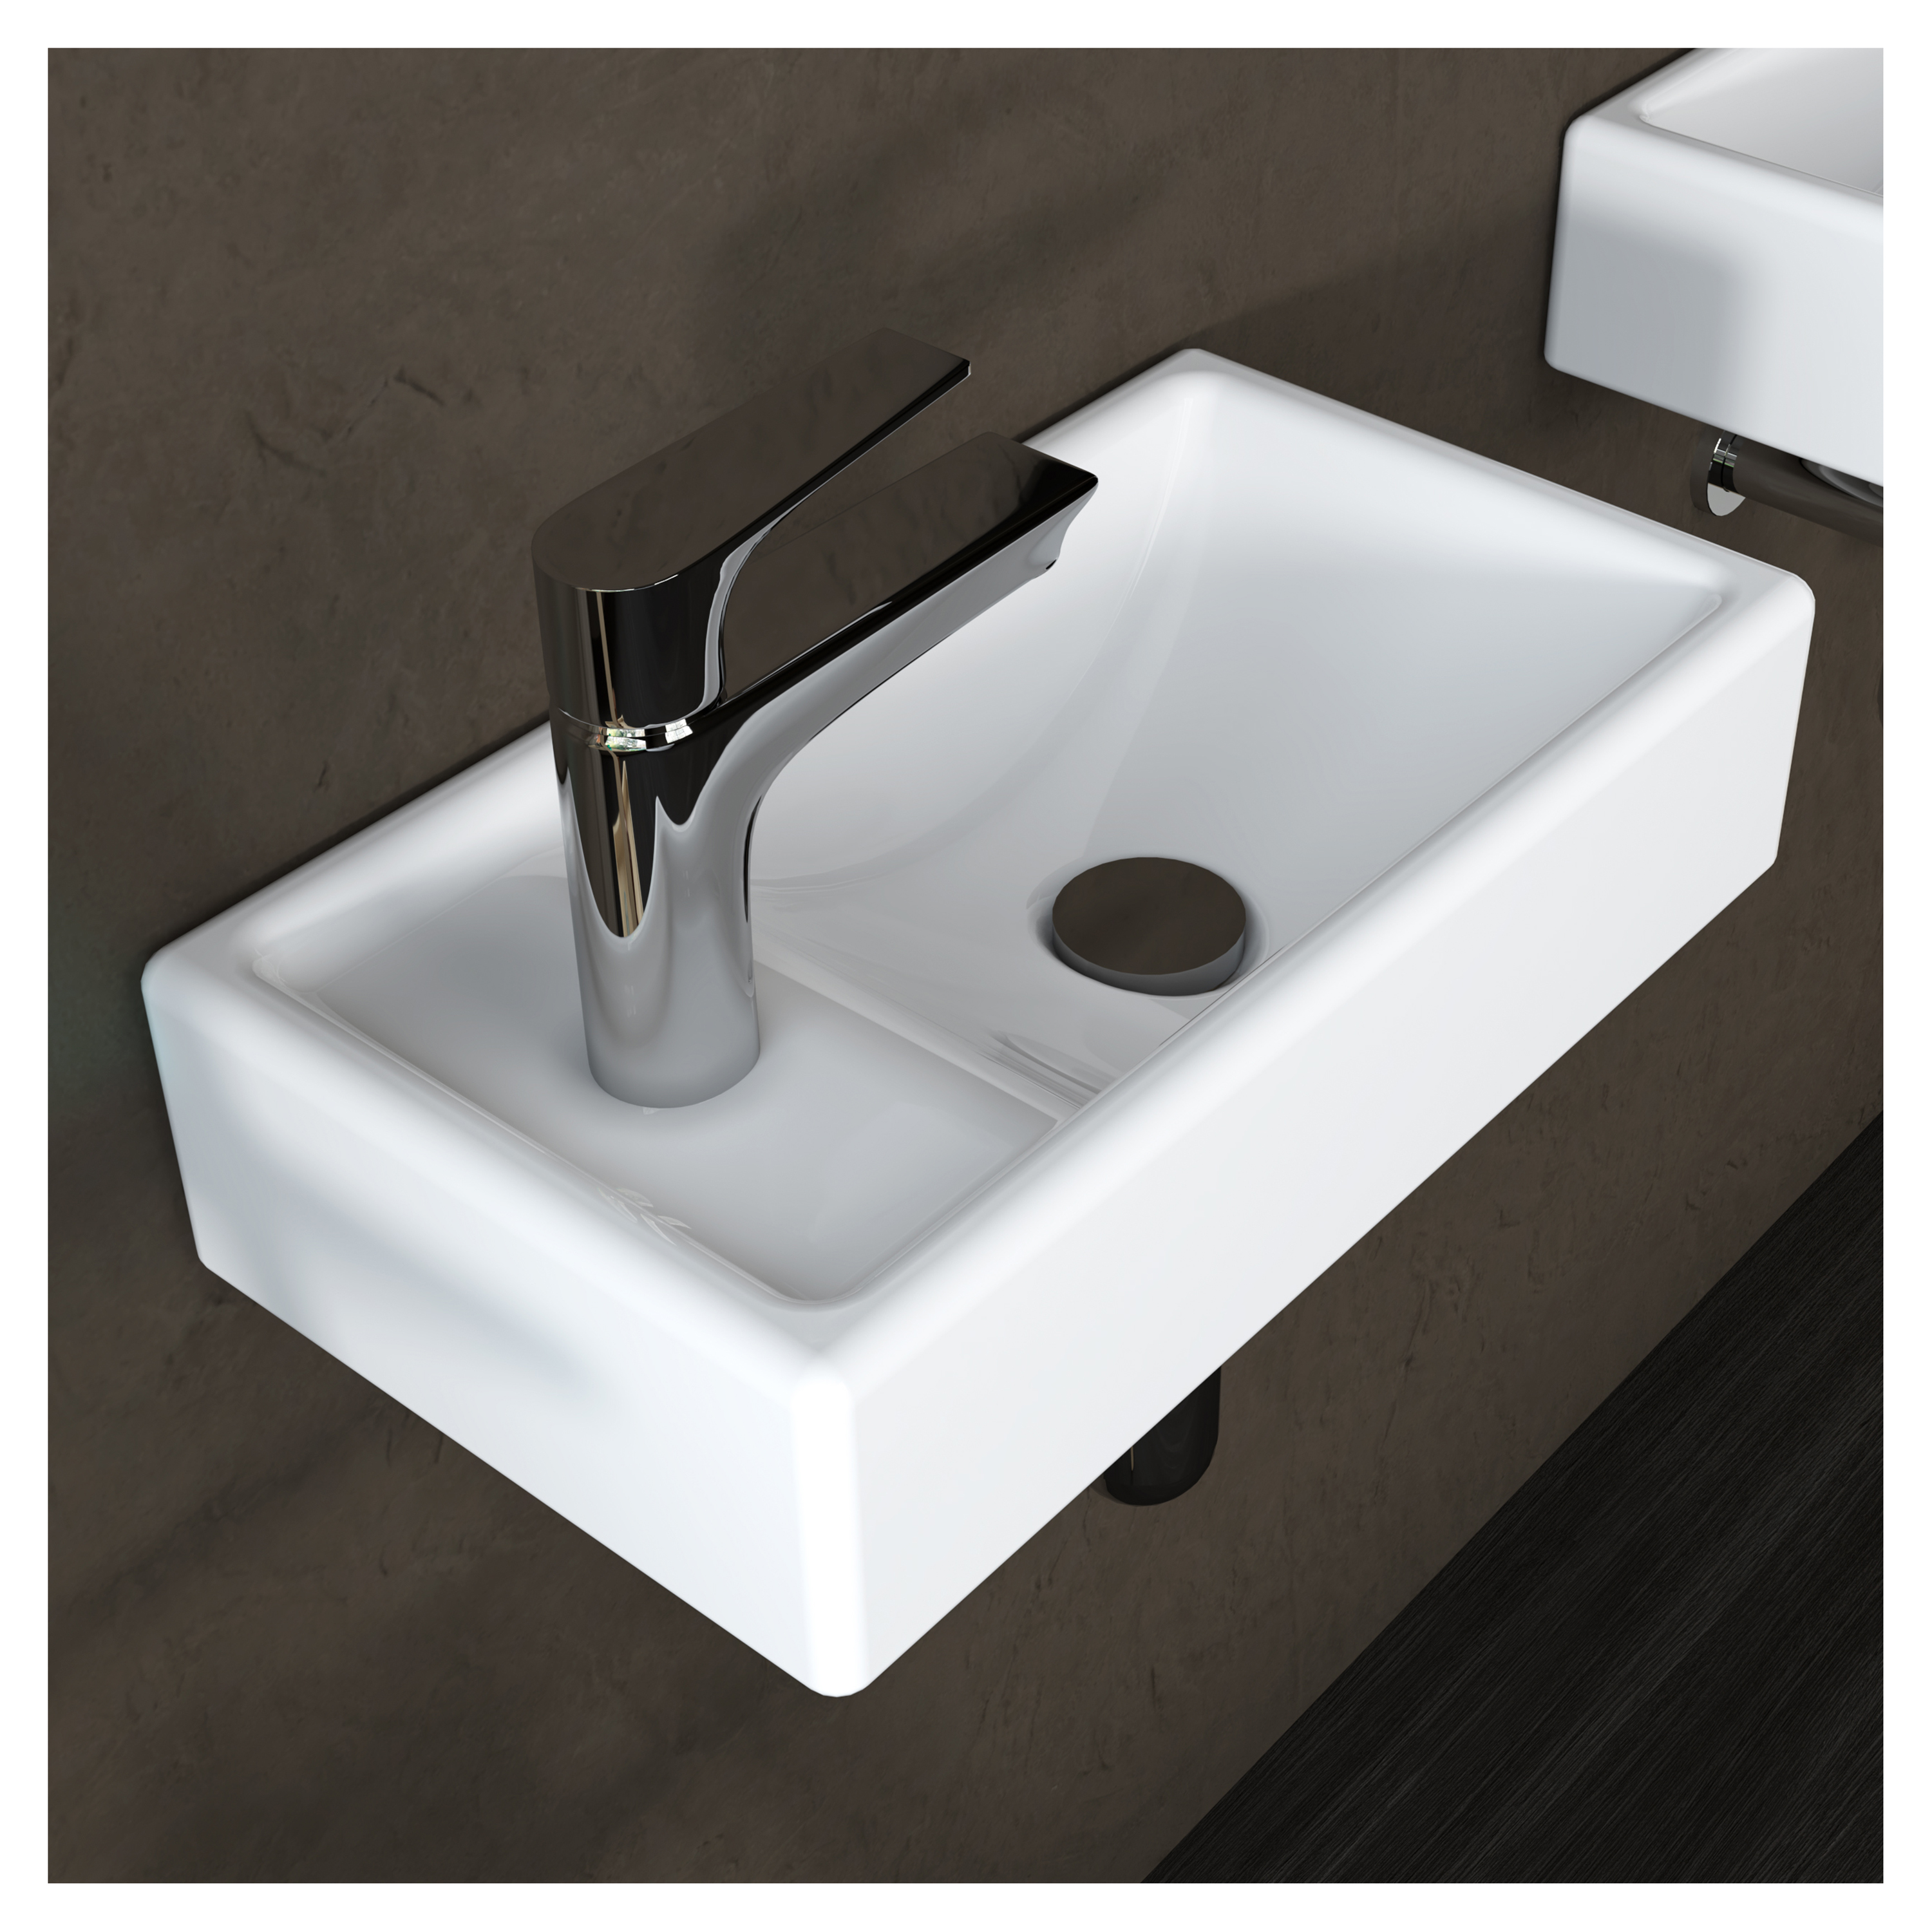 MEJE 16-дюймовая угловая настенная раковина для ванной комнаты, маленькая раковина для ванной комнаты, керамическая белая прямоугольная раковина (левая)